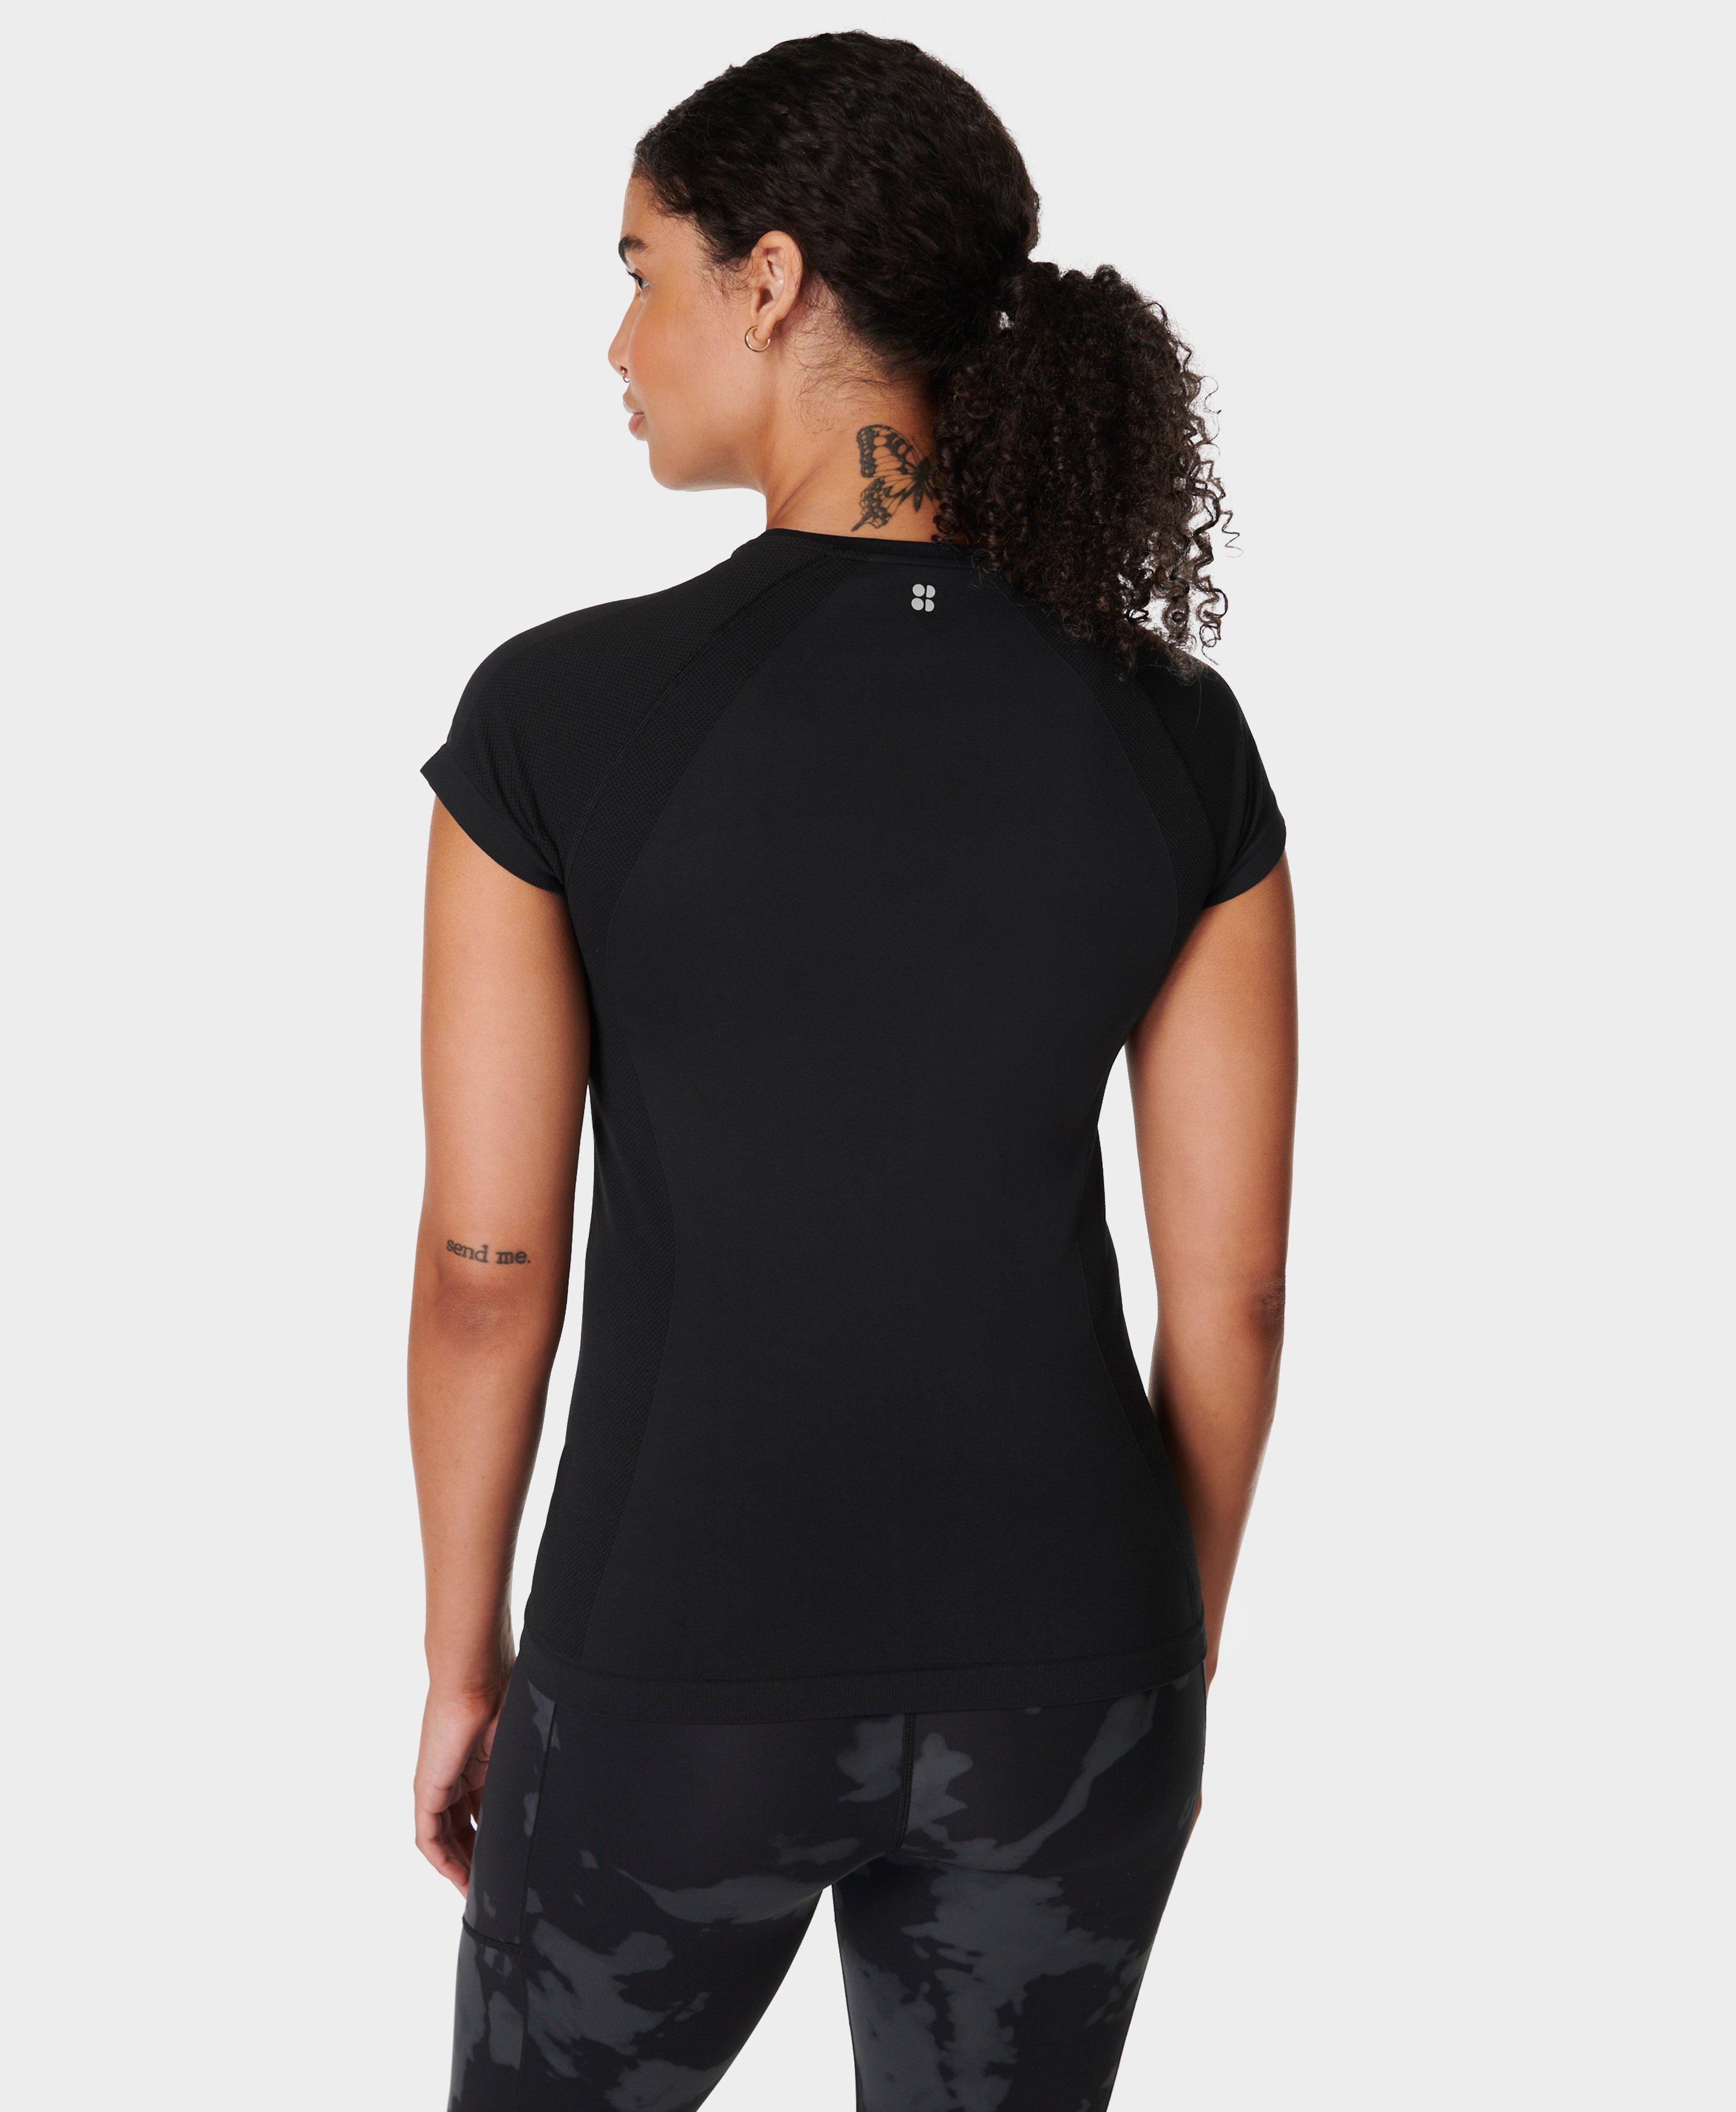 Athlete Seamless Gym T-Shirt - Black, Women's T-Shirts